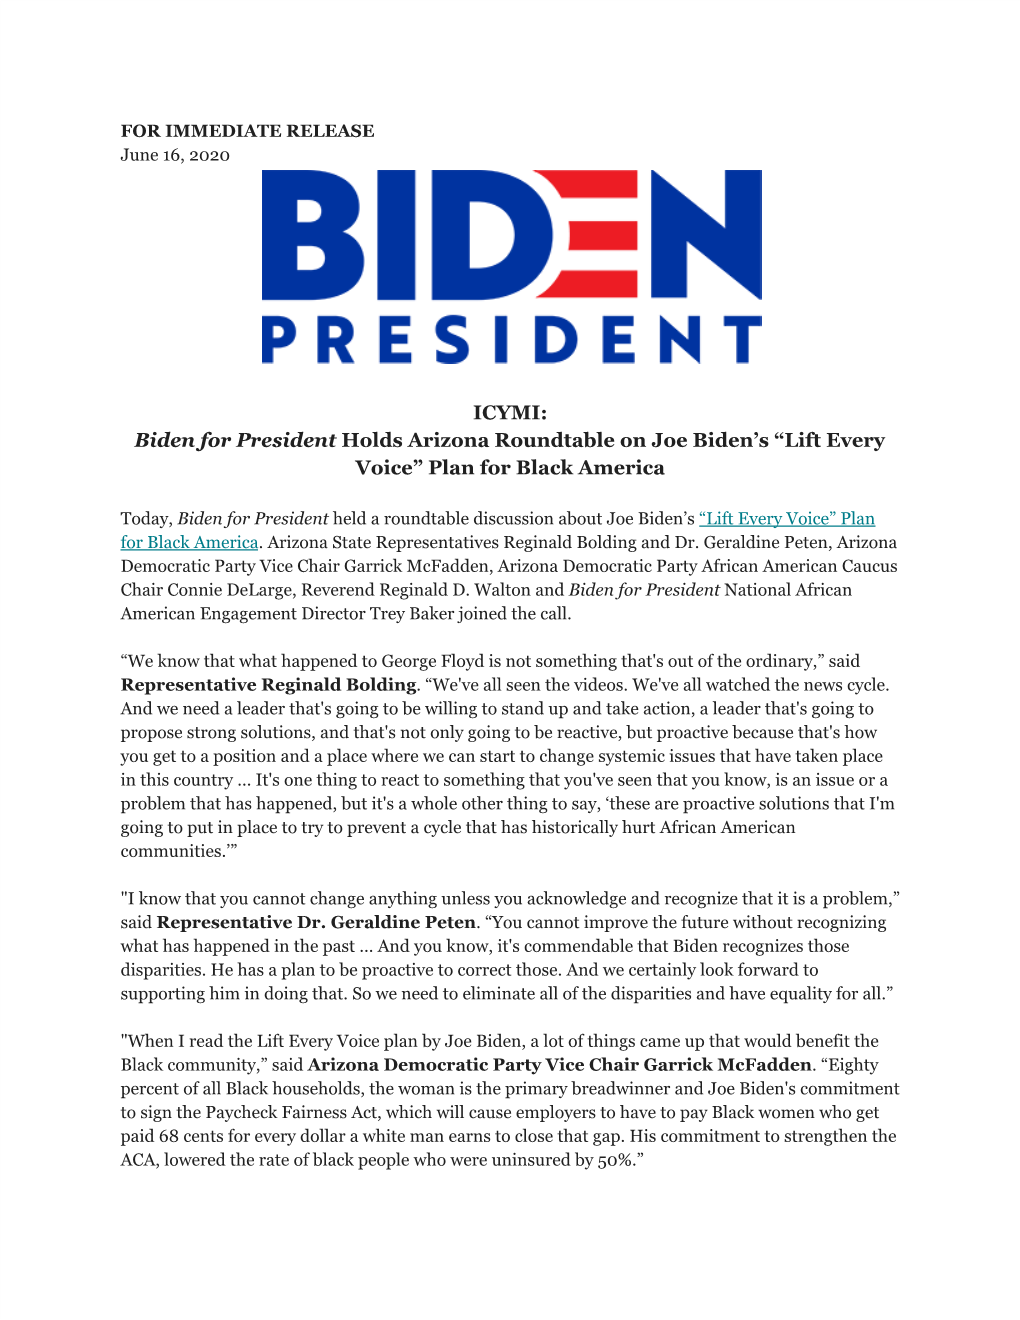 ICYMI: Biden for President​ Holds Arizona Roundtable on Joe Biden's